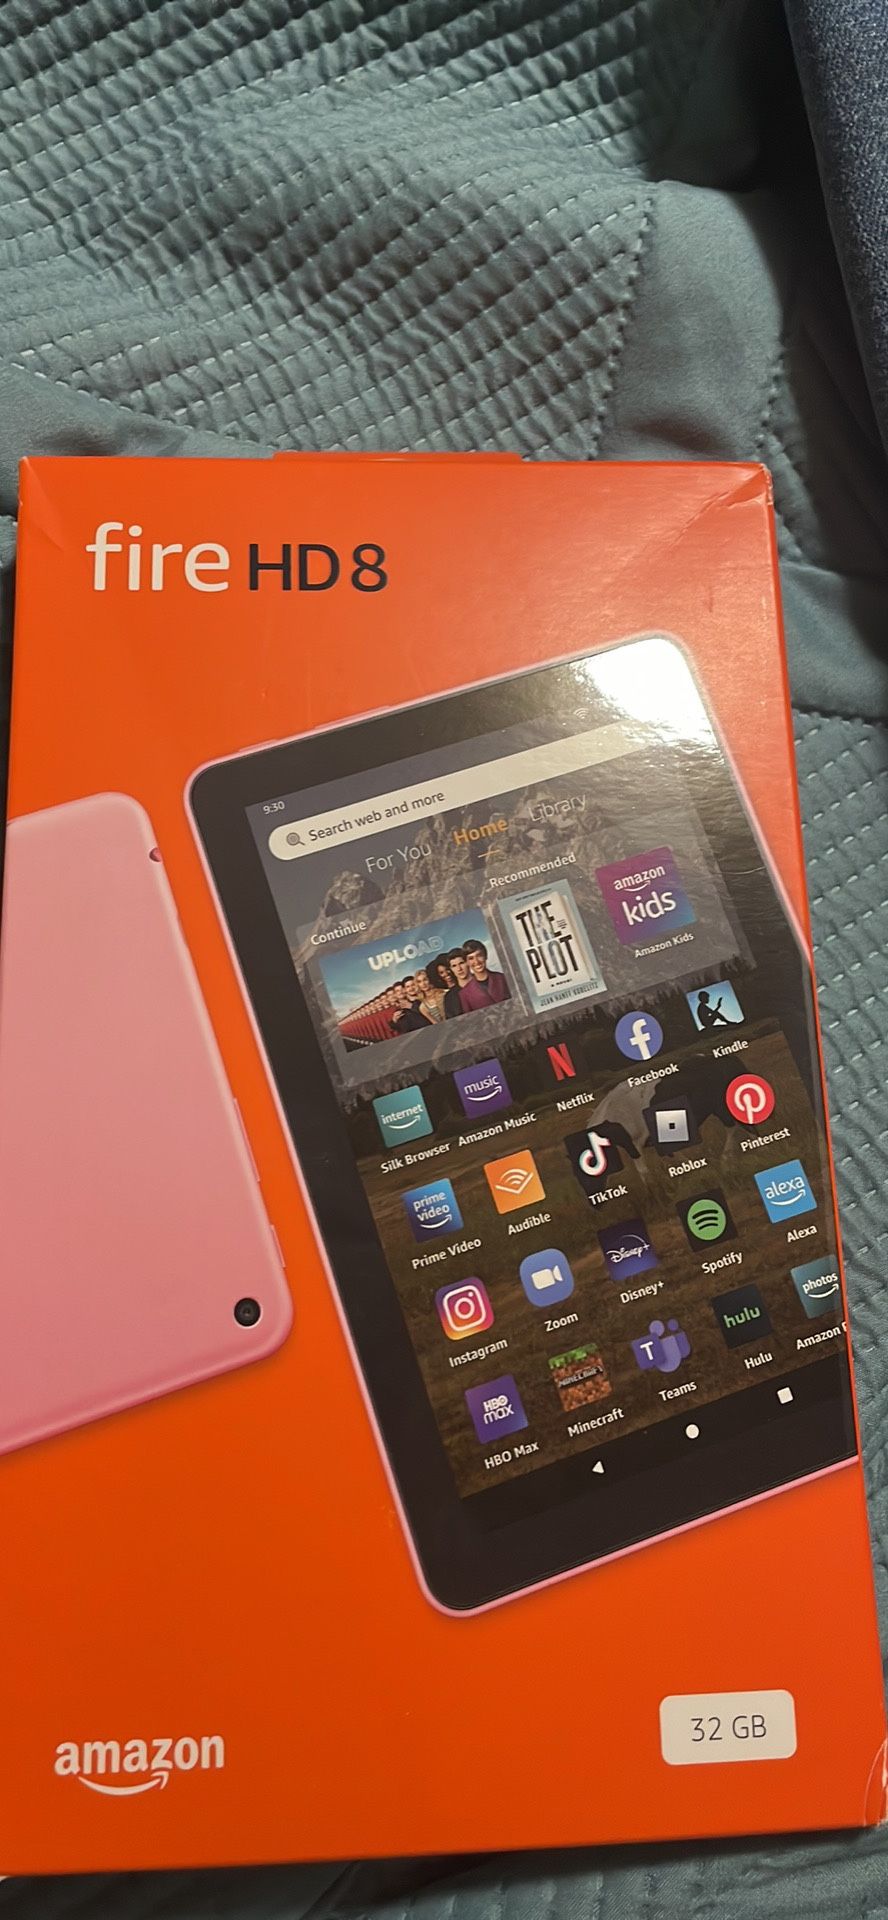 Amazon HD8 Tablet